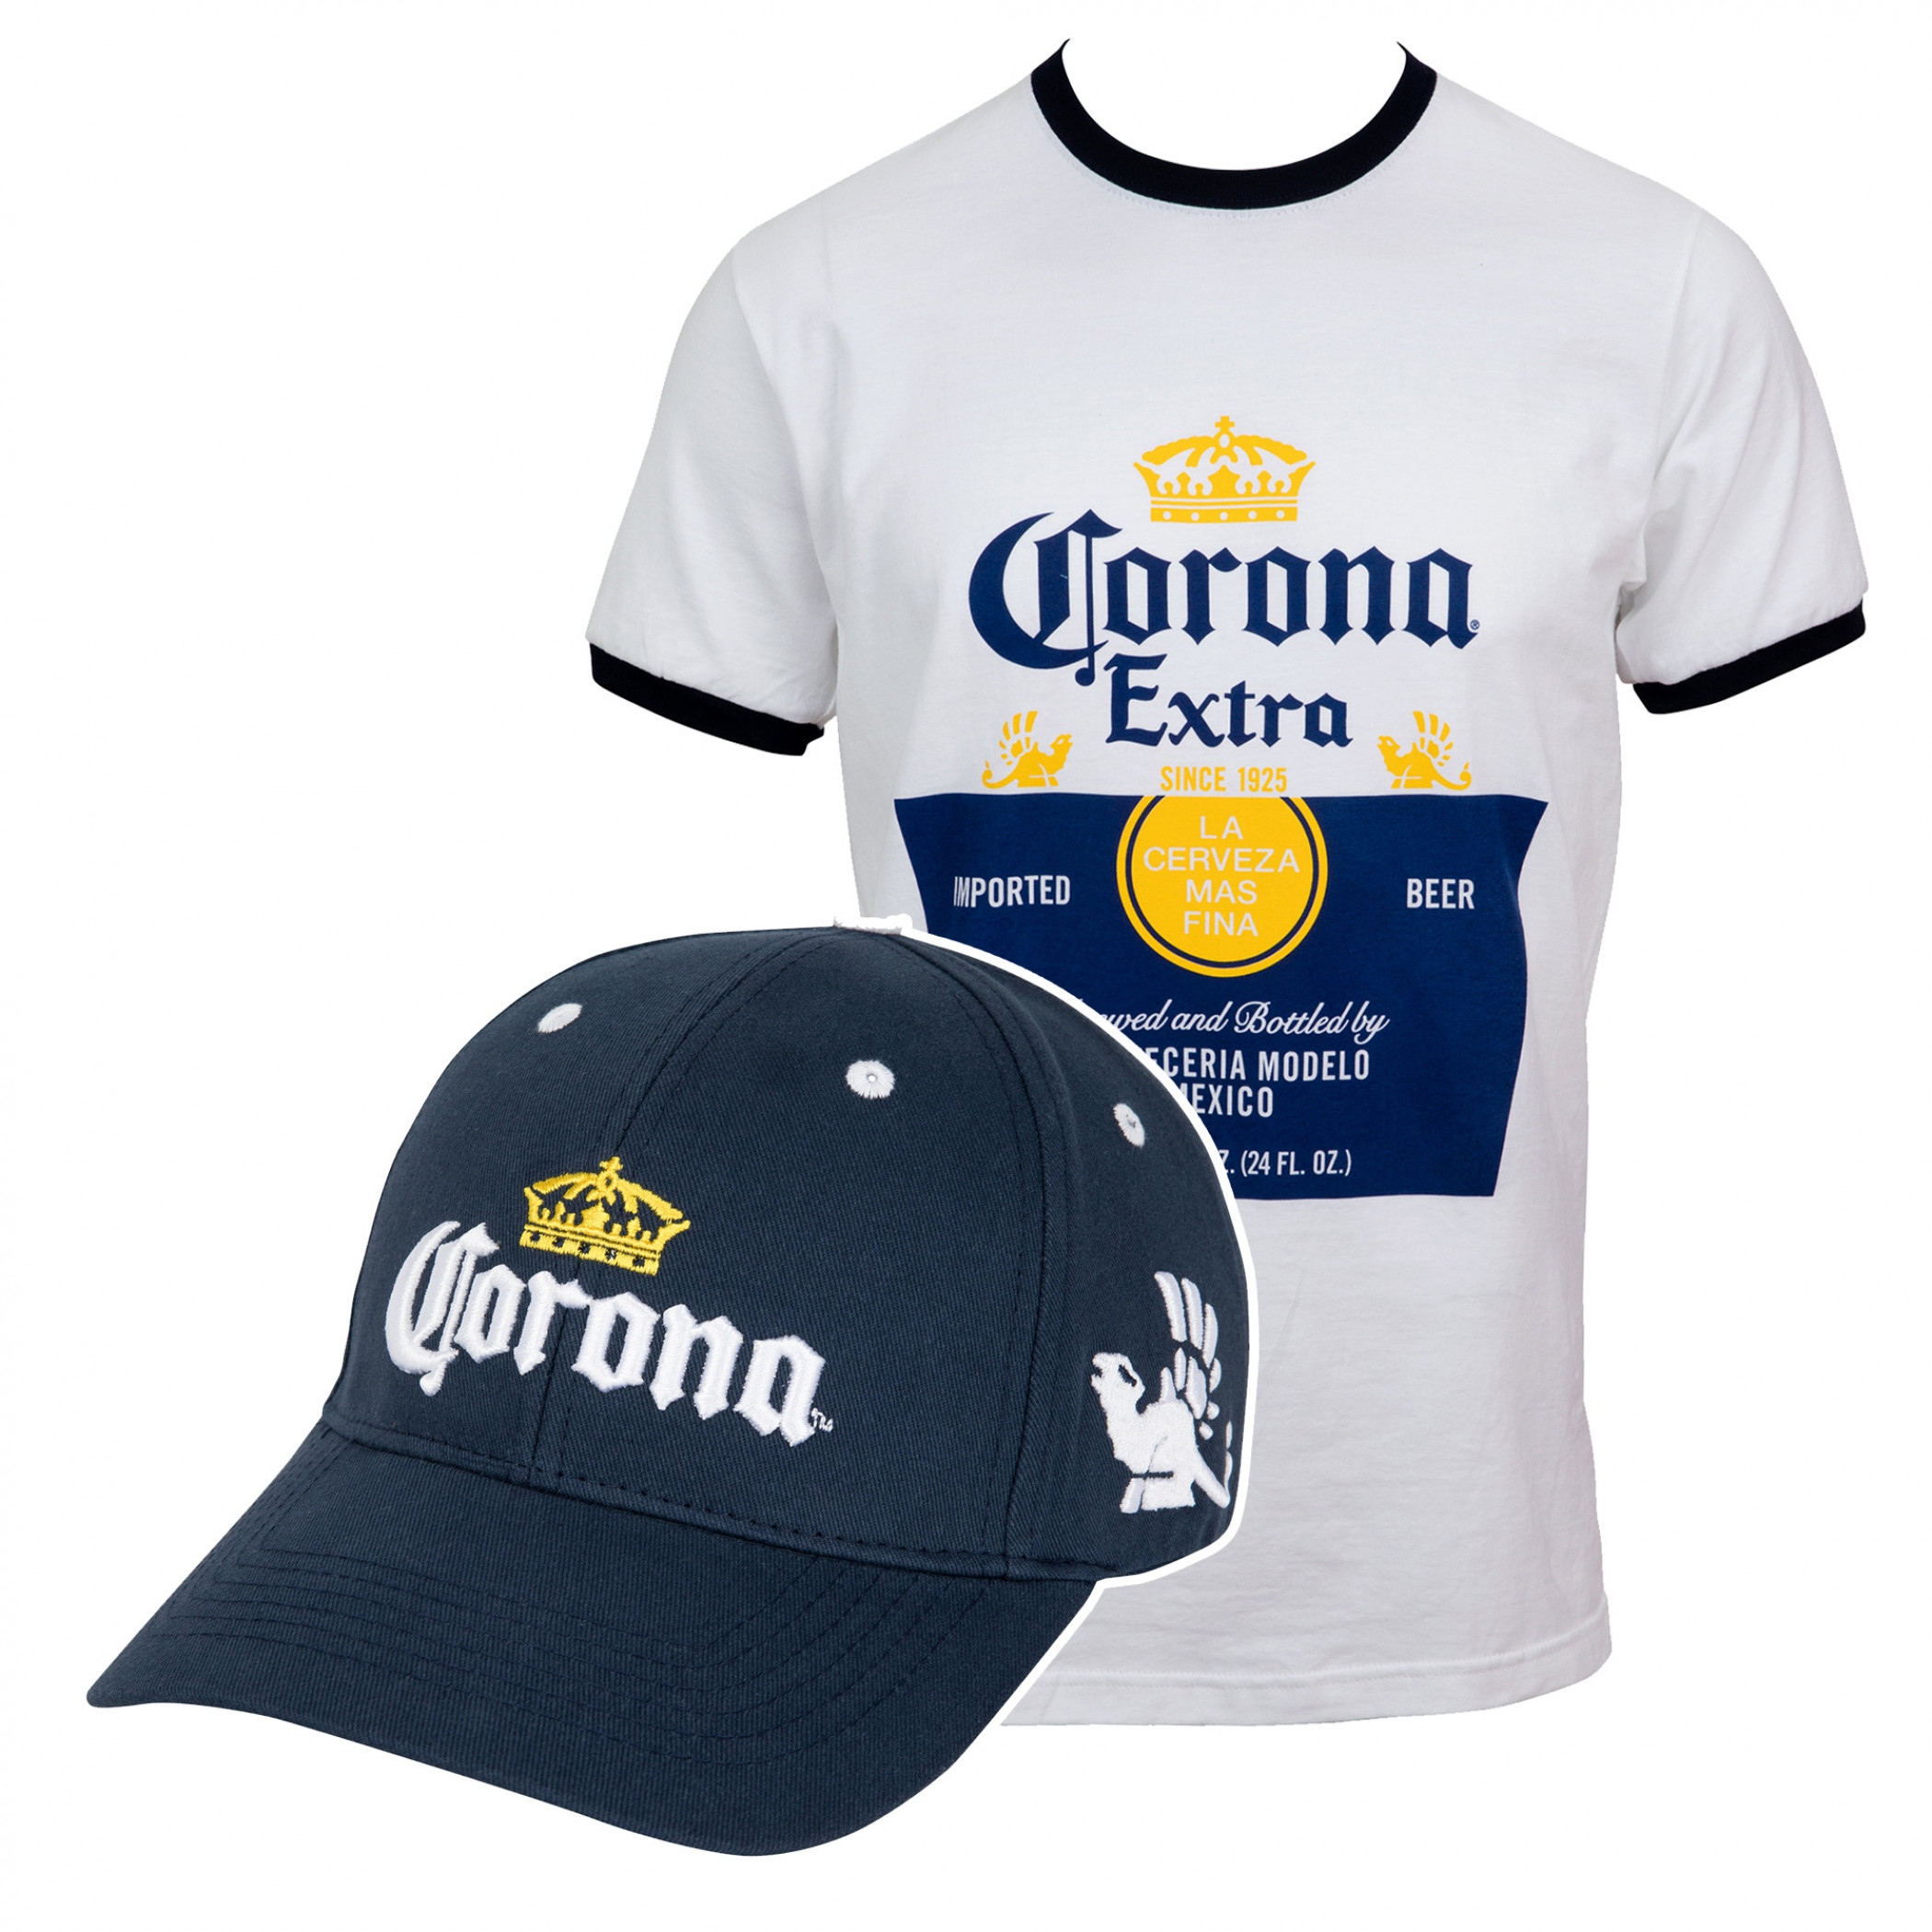 Corona Extra Hat and T-Shirt Bundle